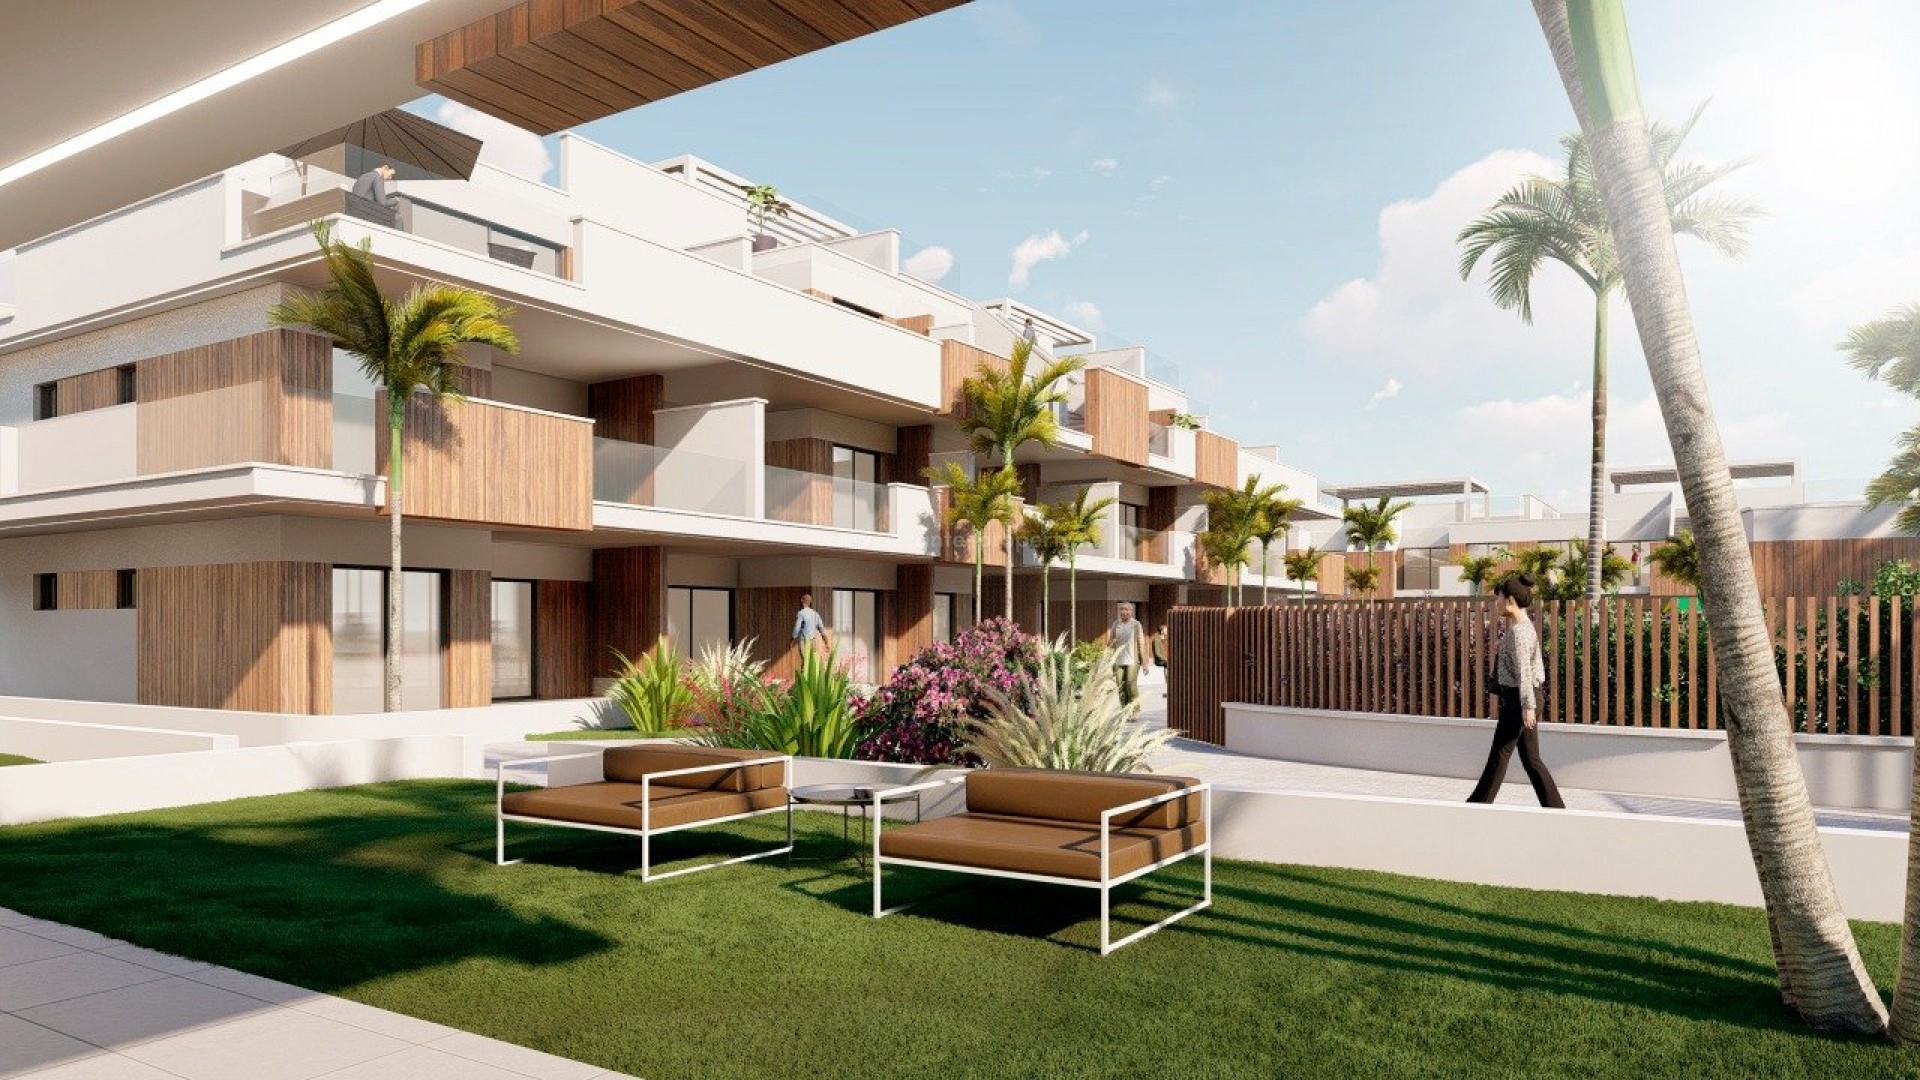 New residential complex in Pilar de La Horadada, 2/3 bedrooms, garden or terrace or solarium. Each property has garage spaces and stalls in the basement.